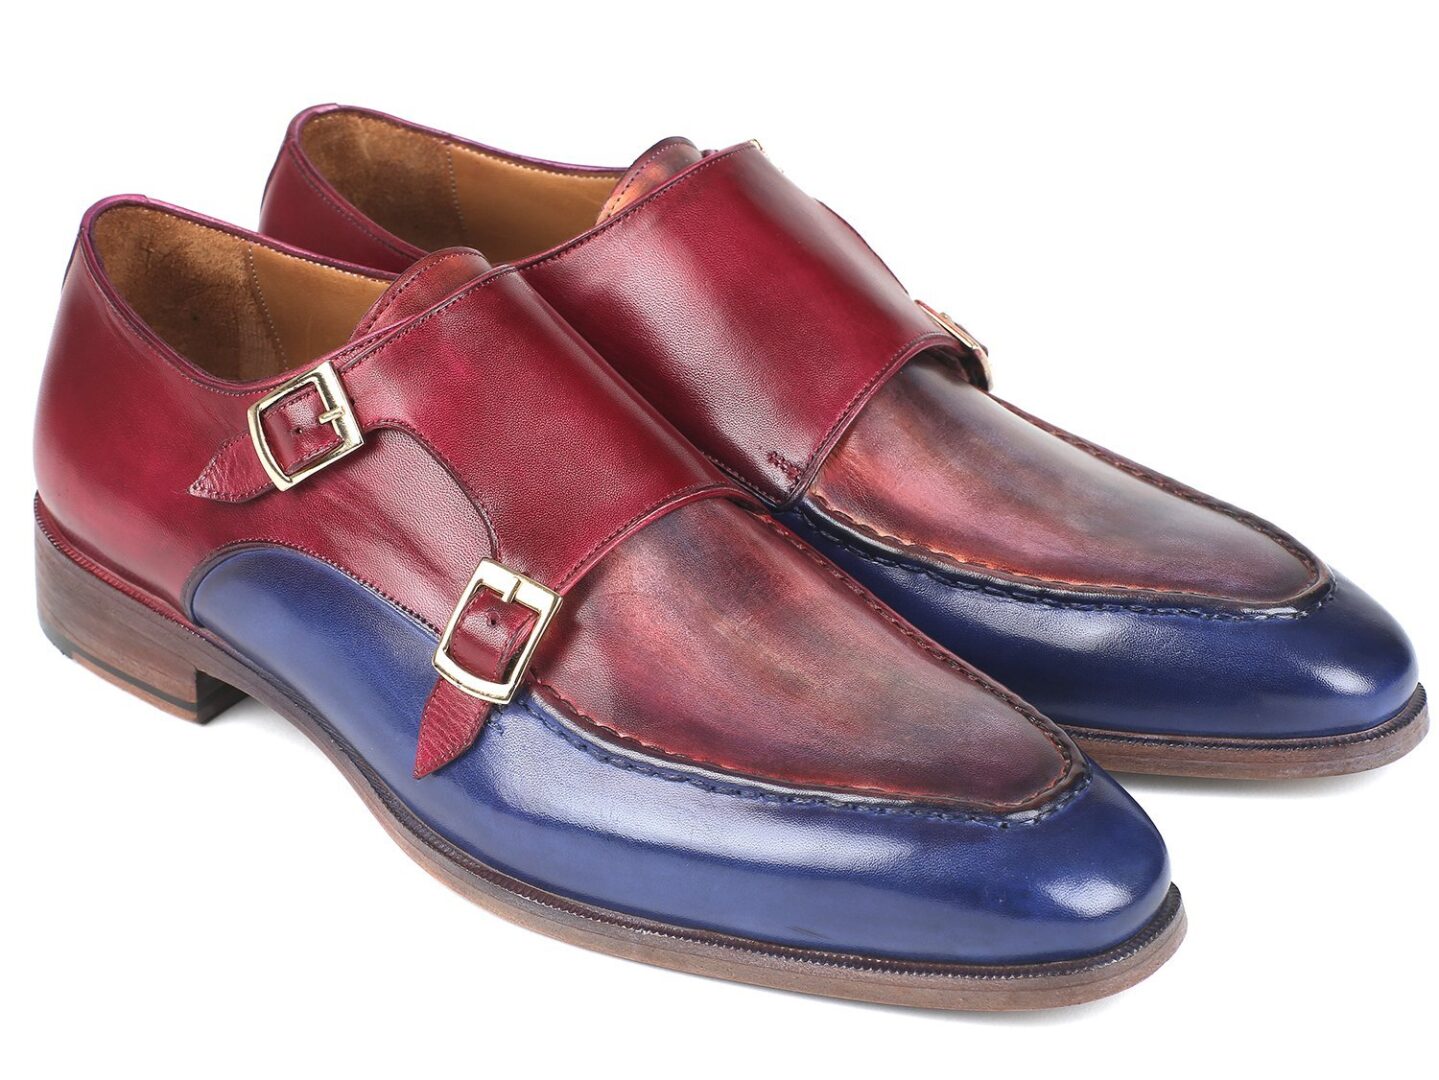 Paul Parkman Navy Double Monkstrap Shoes two tone red and blue